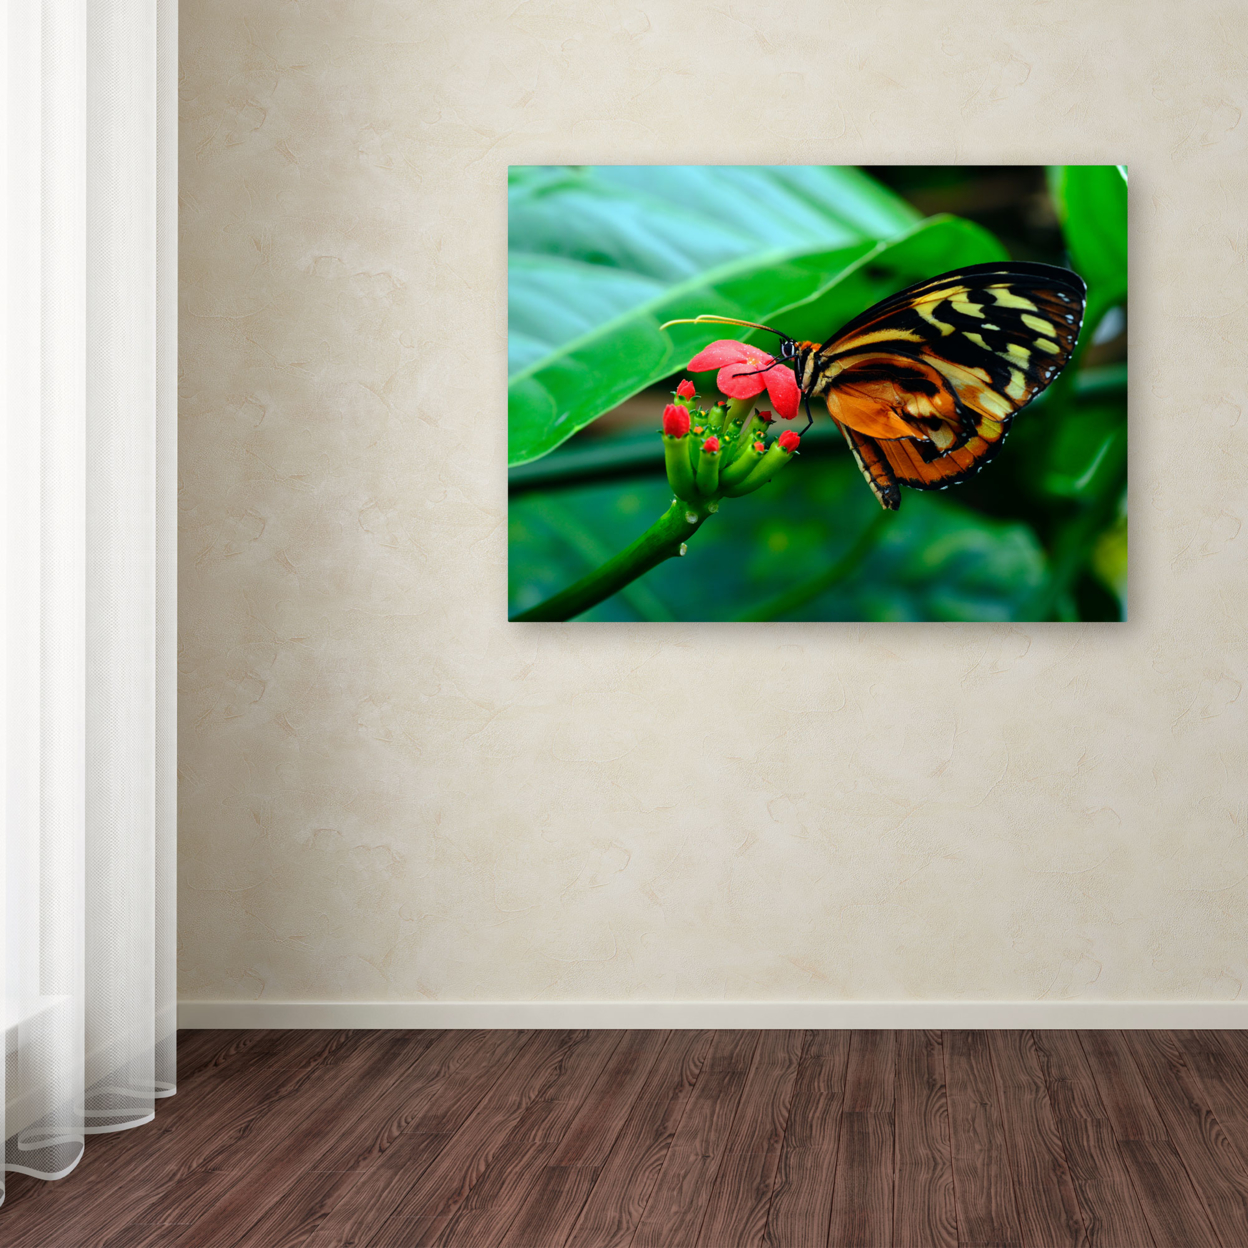 Kurt Shaffer 'Cream Spotted Tigerwing' Canvas Wall Art 35 X 47 Inches